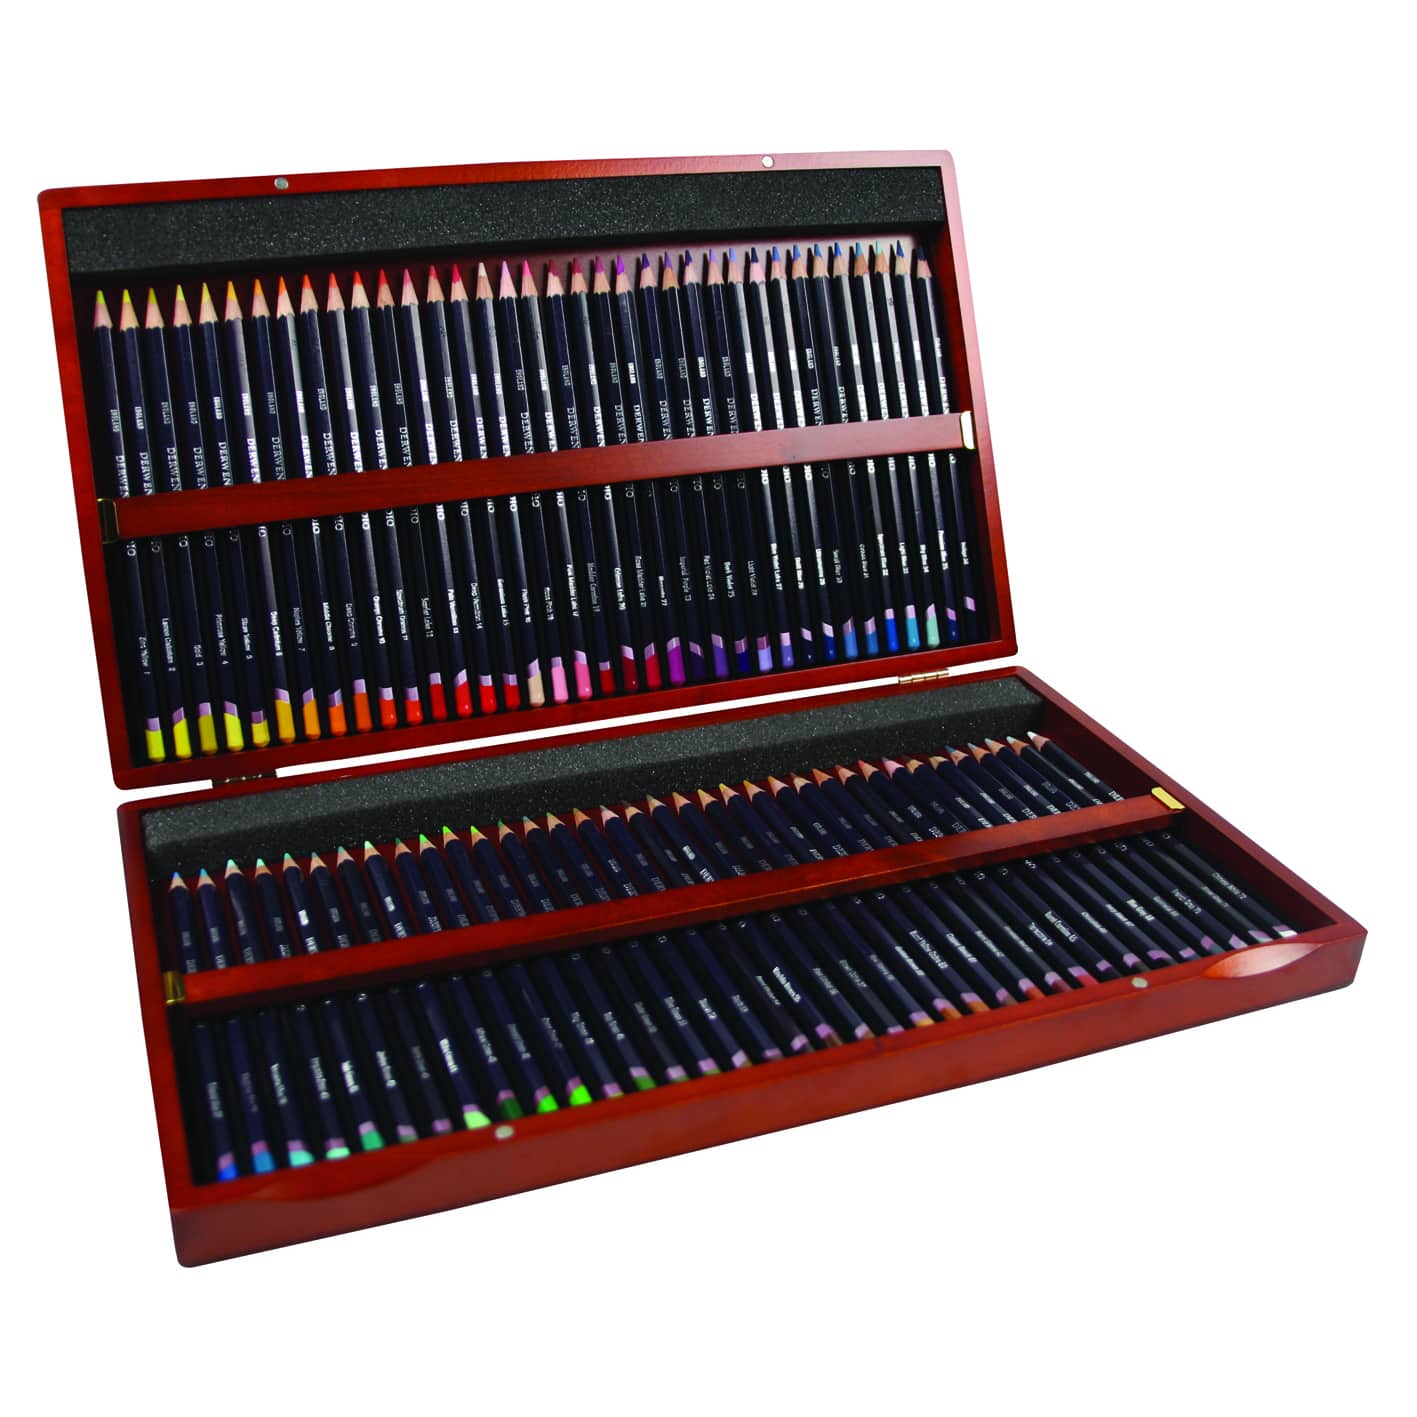 Derwent&#xAE; Studio Colored Pencil 72 Color Wood Box Set